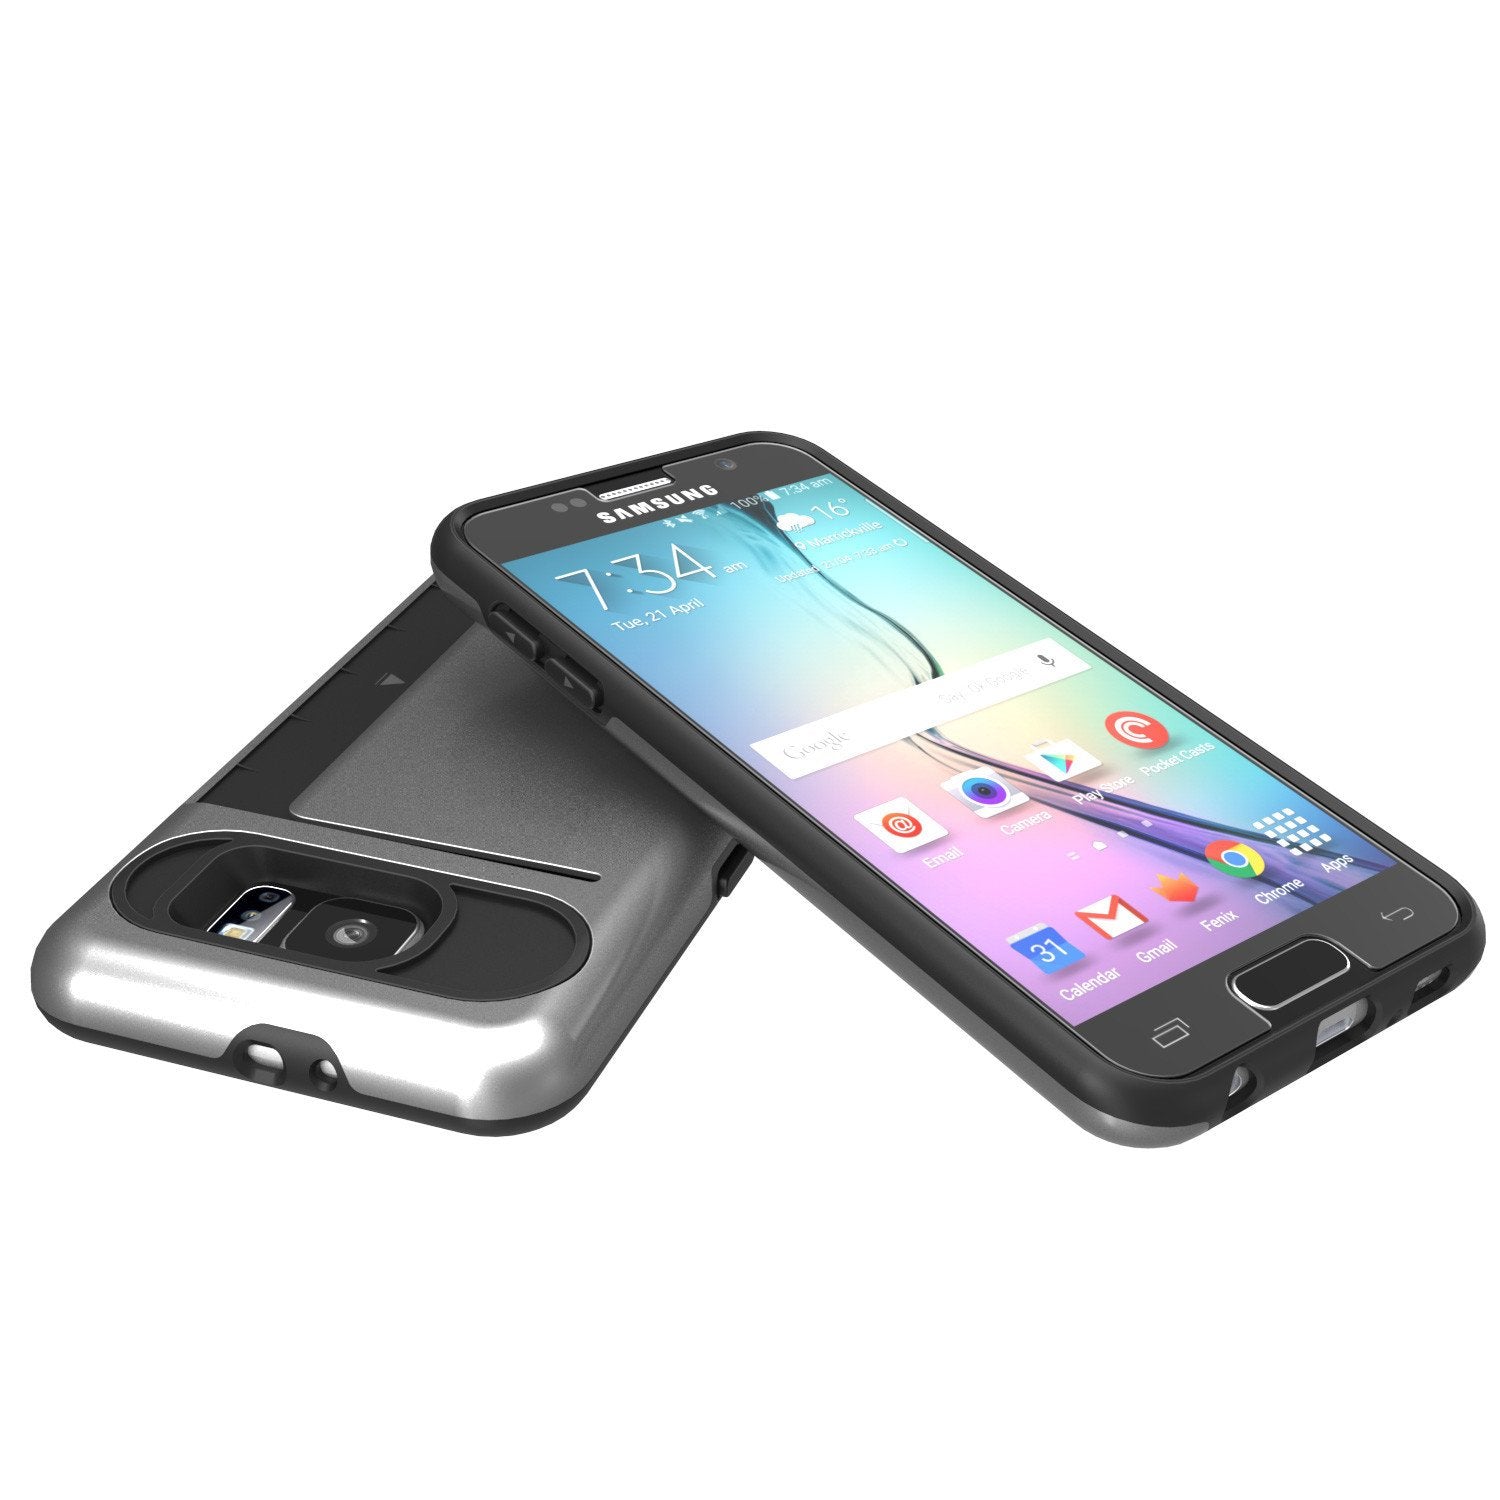 Galaxy S6 EDGE Case PunkCase CLUTCH Grey Series Slim Armor Soft Cover Case w/ Screen Protector - PunkCase NZ